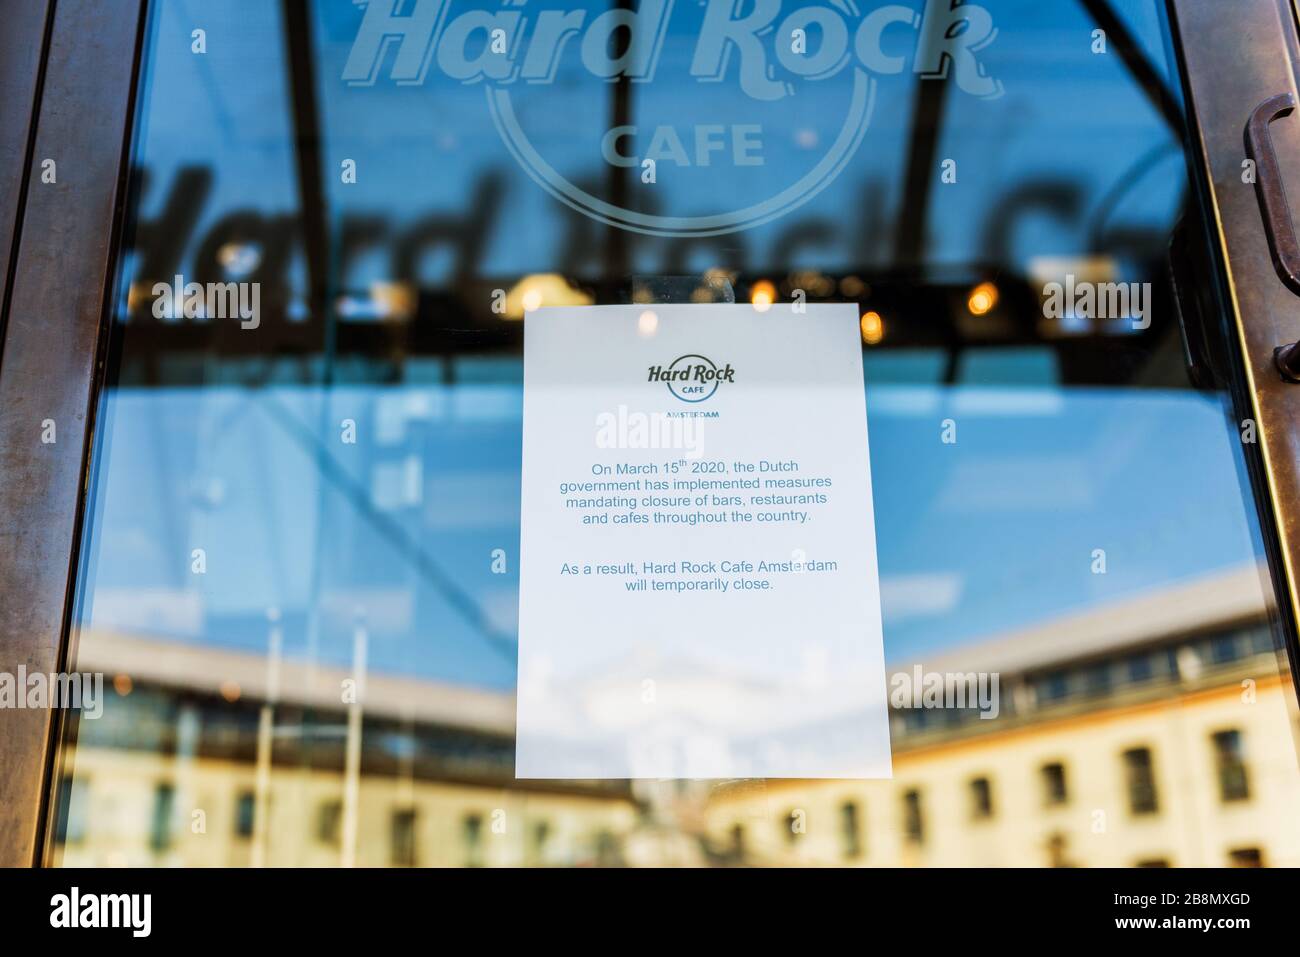 Closed Hard Rock Cafe in Amsterdam Netherlands because of coronavirus outbreak Stock Photo